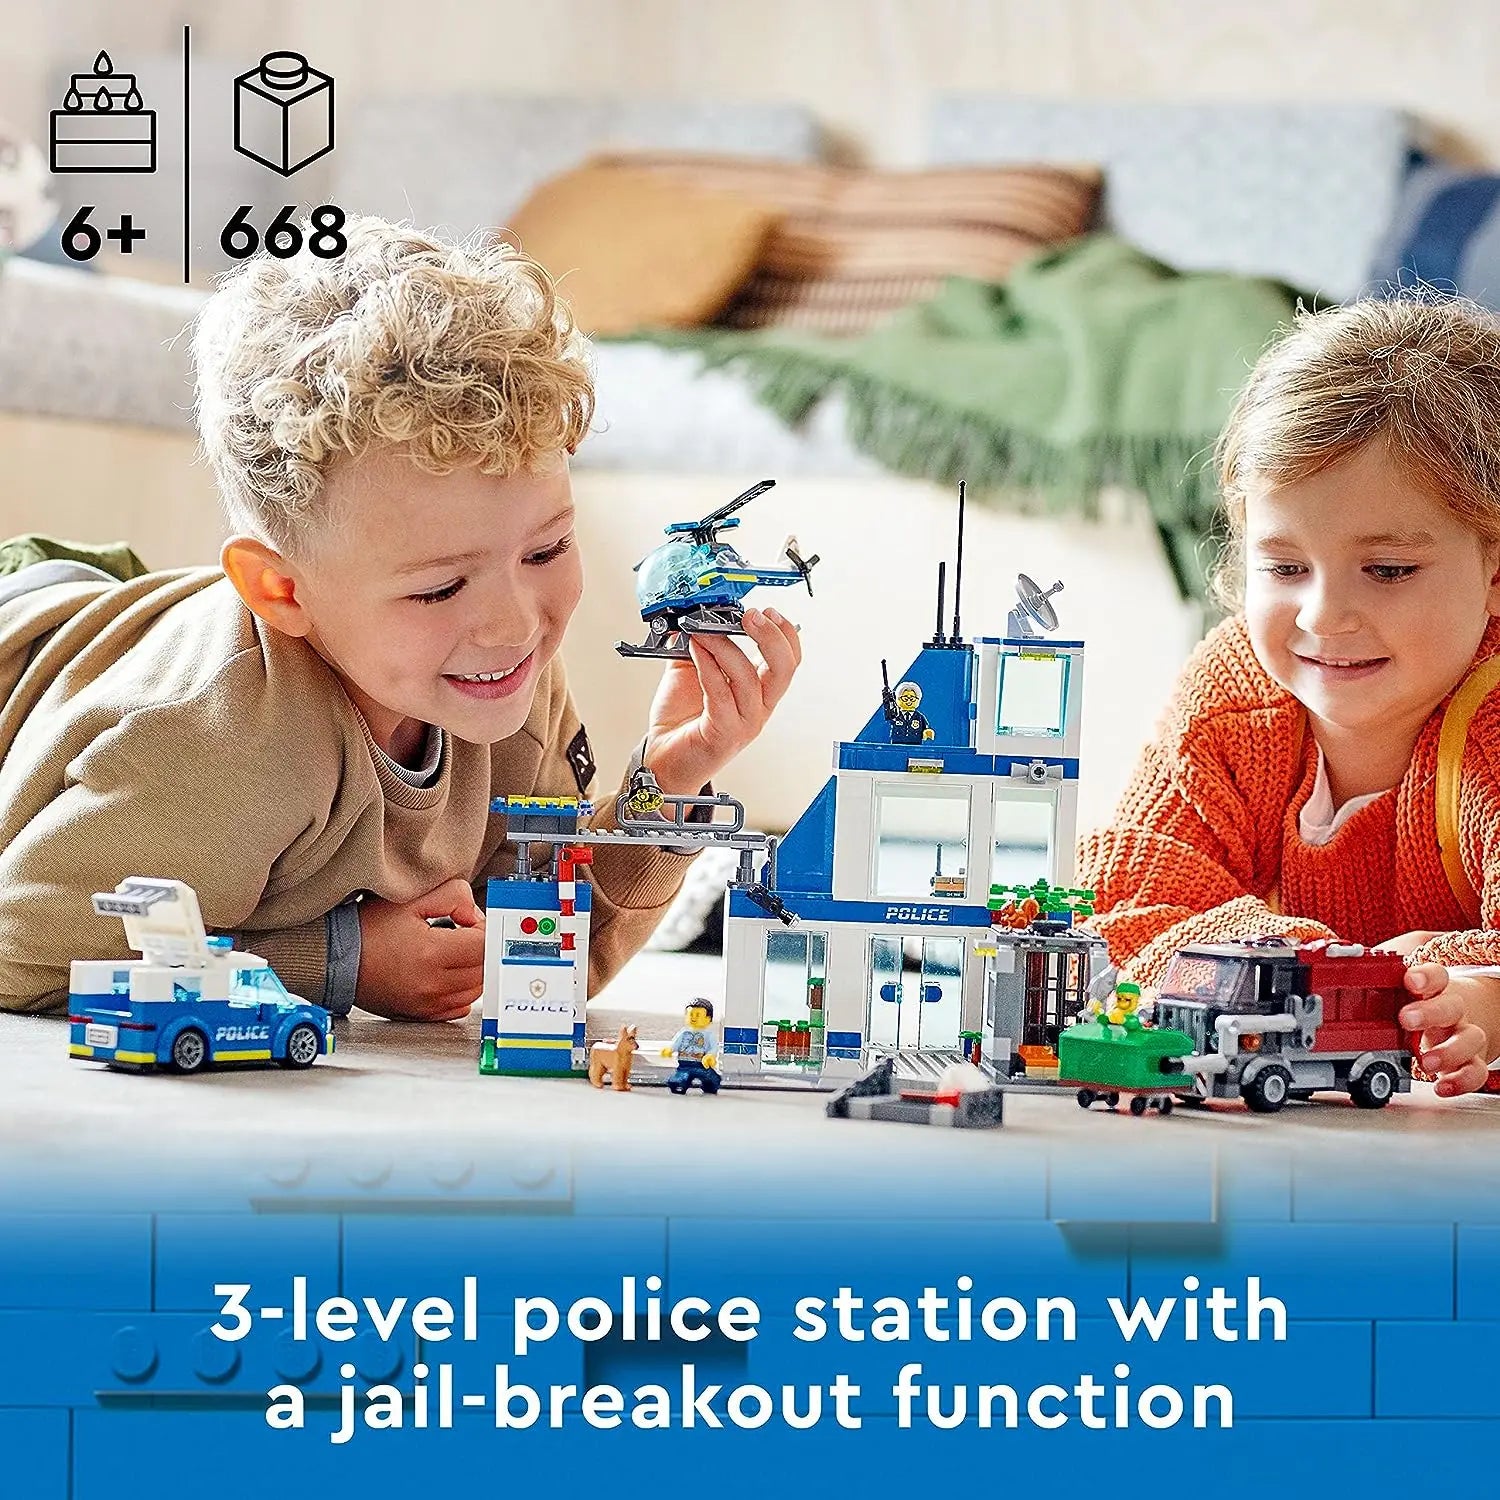 lego 60316 LEGO City Le commissariat de Police lego